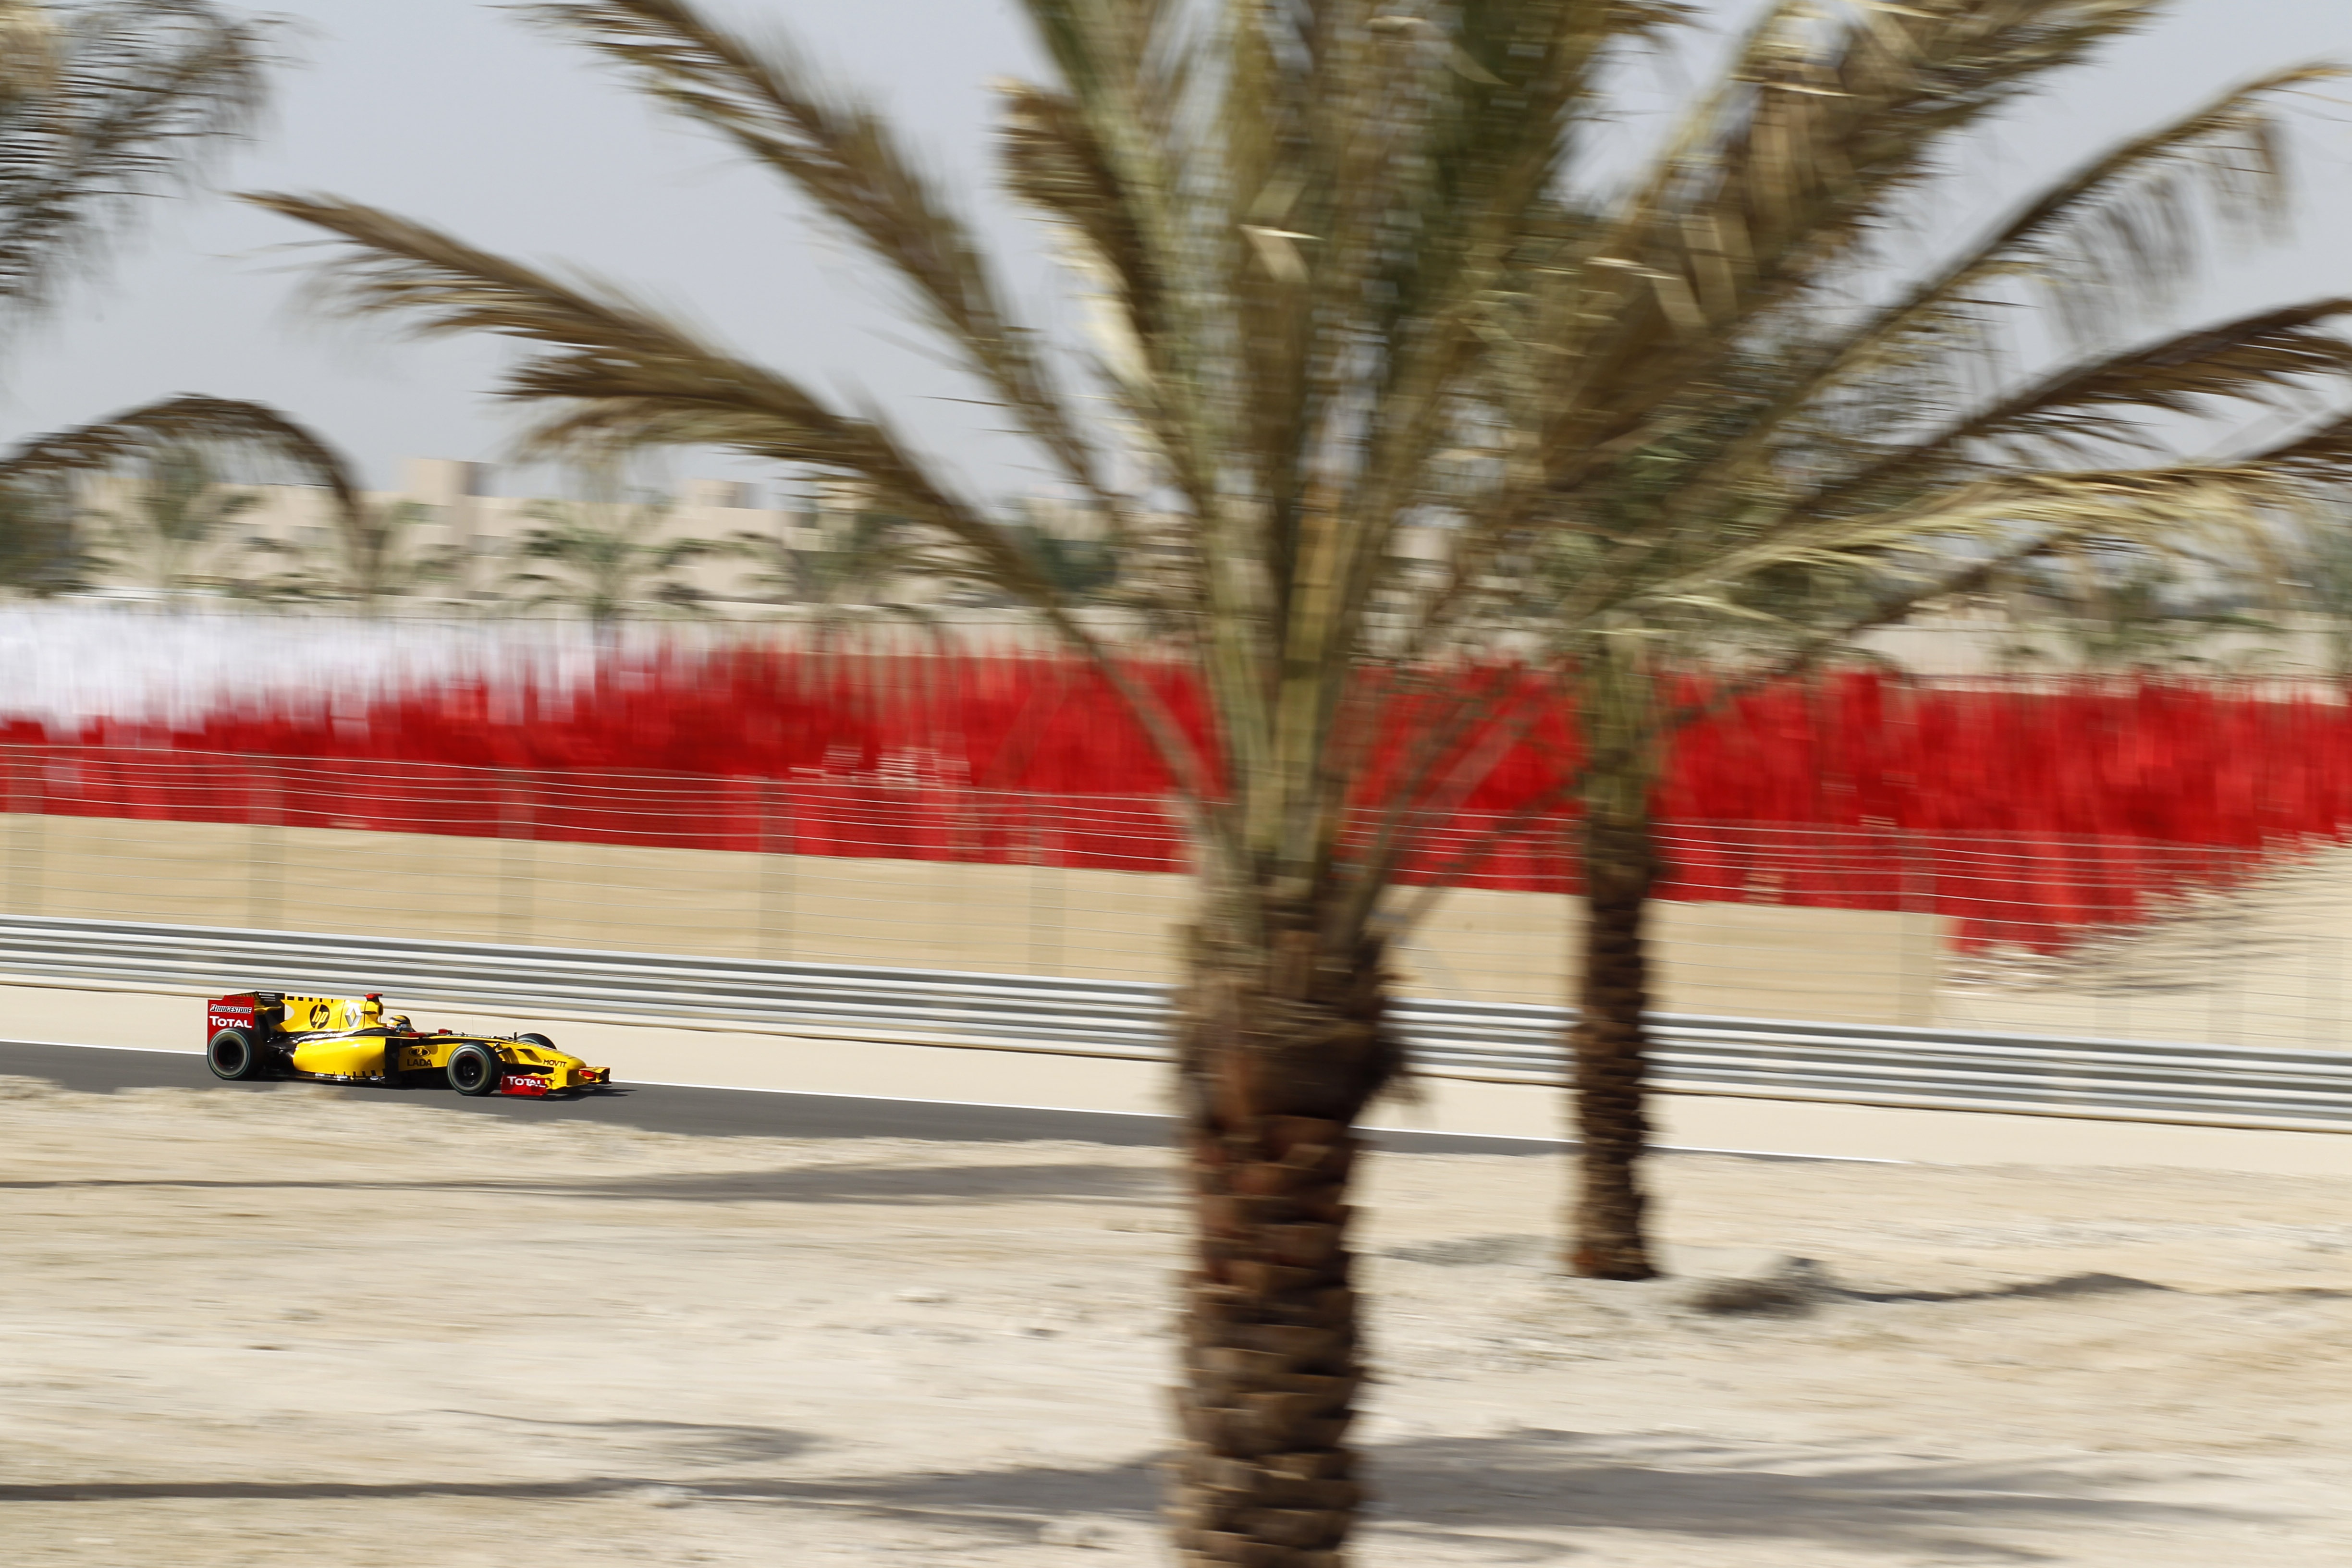 Bahrein hoopt Formule 1 terug te zien